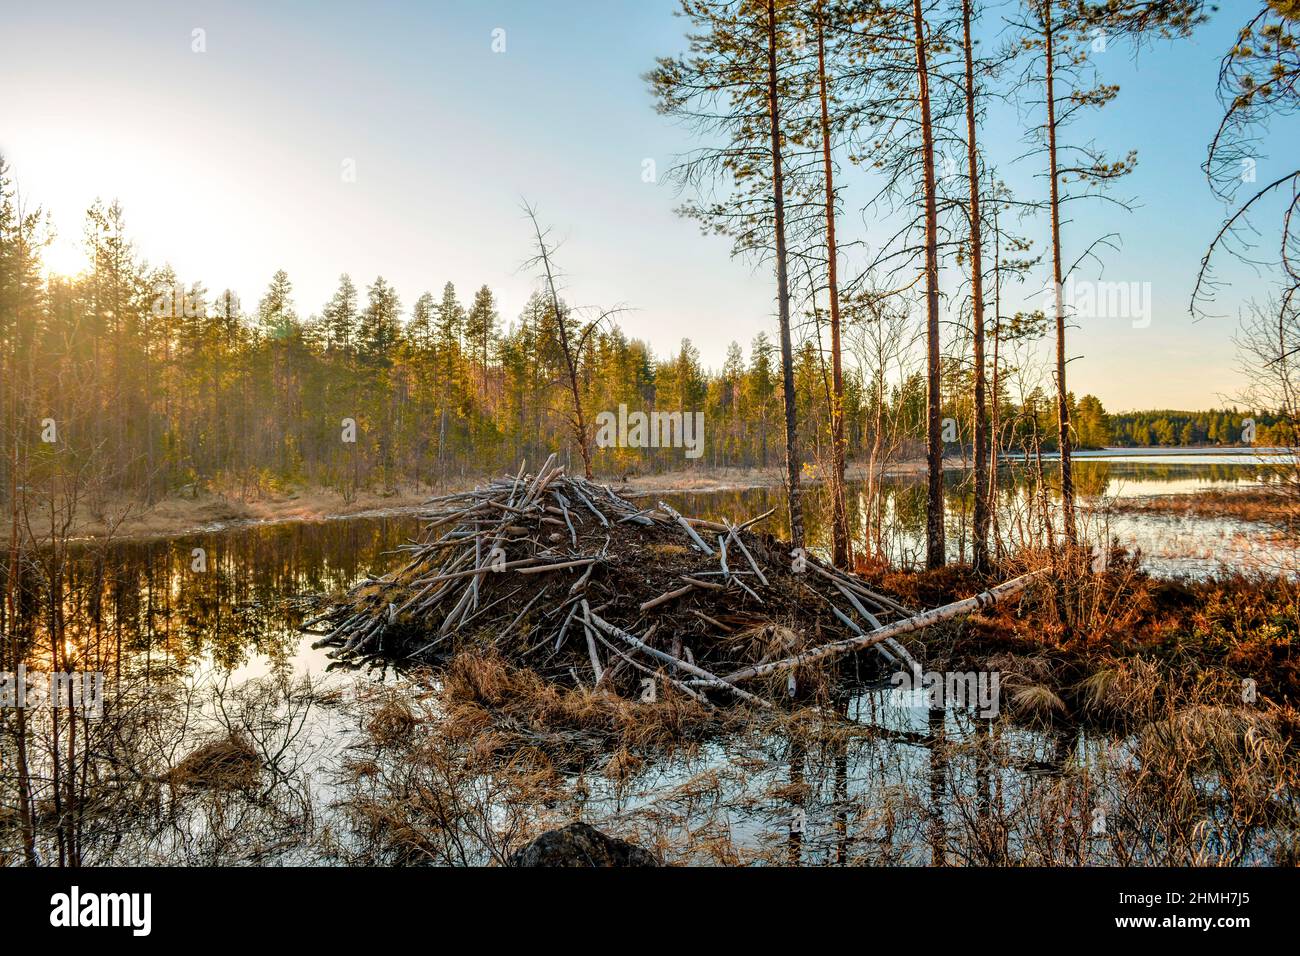 Beaver dam in a swedish landscape Stock Photo